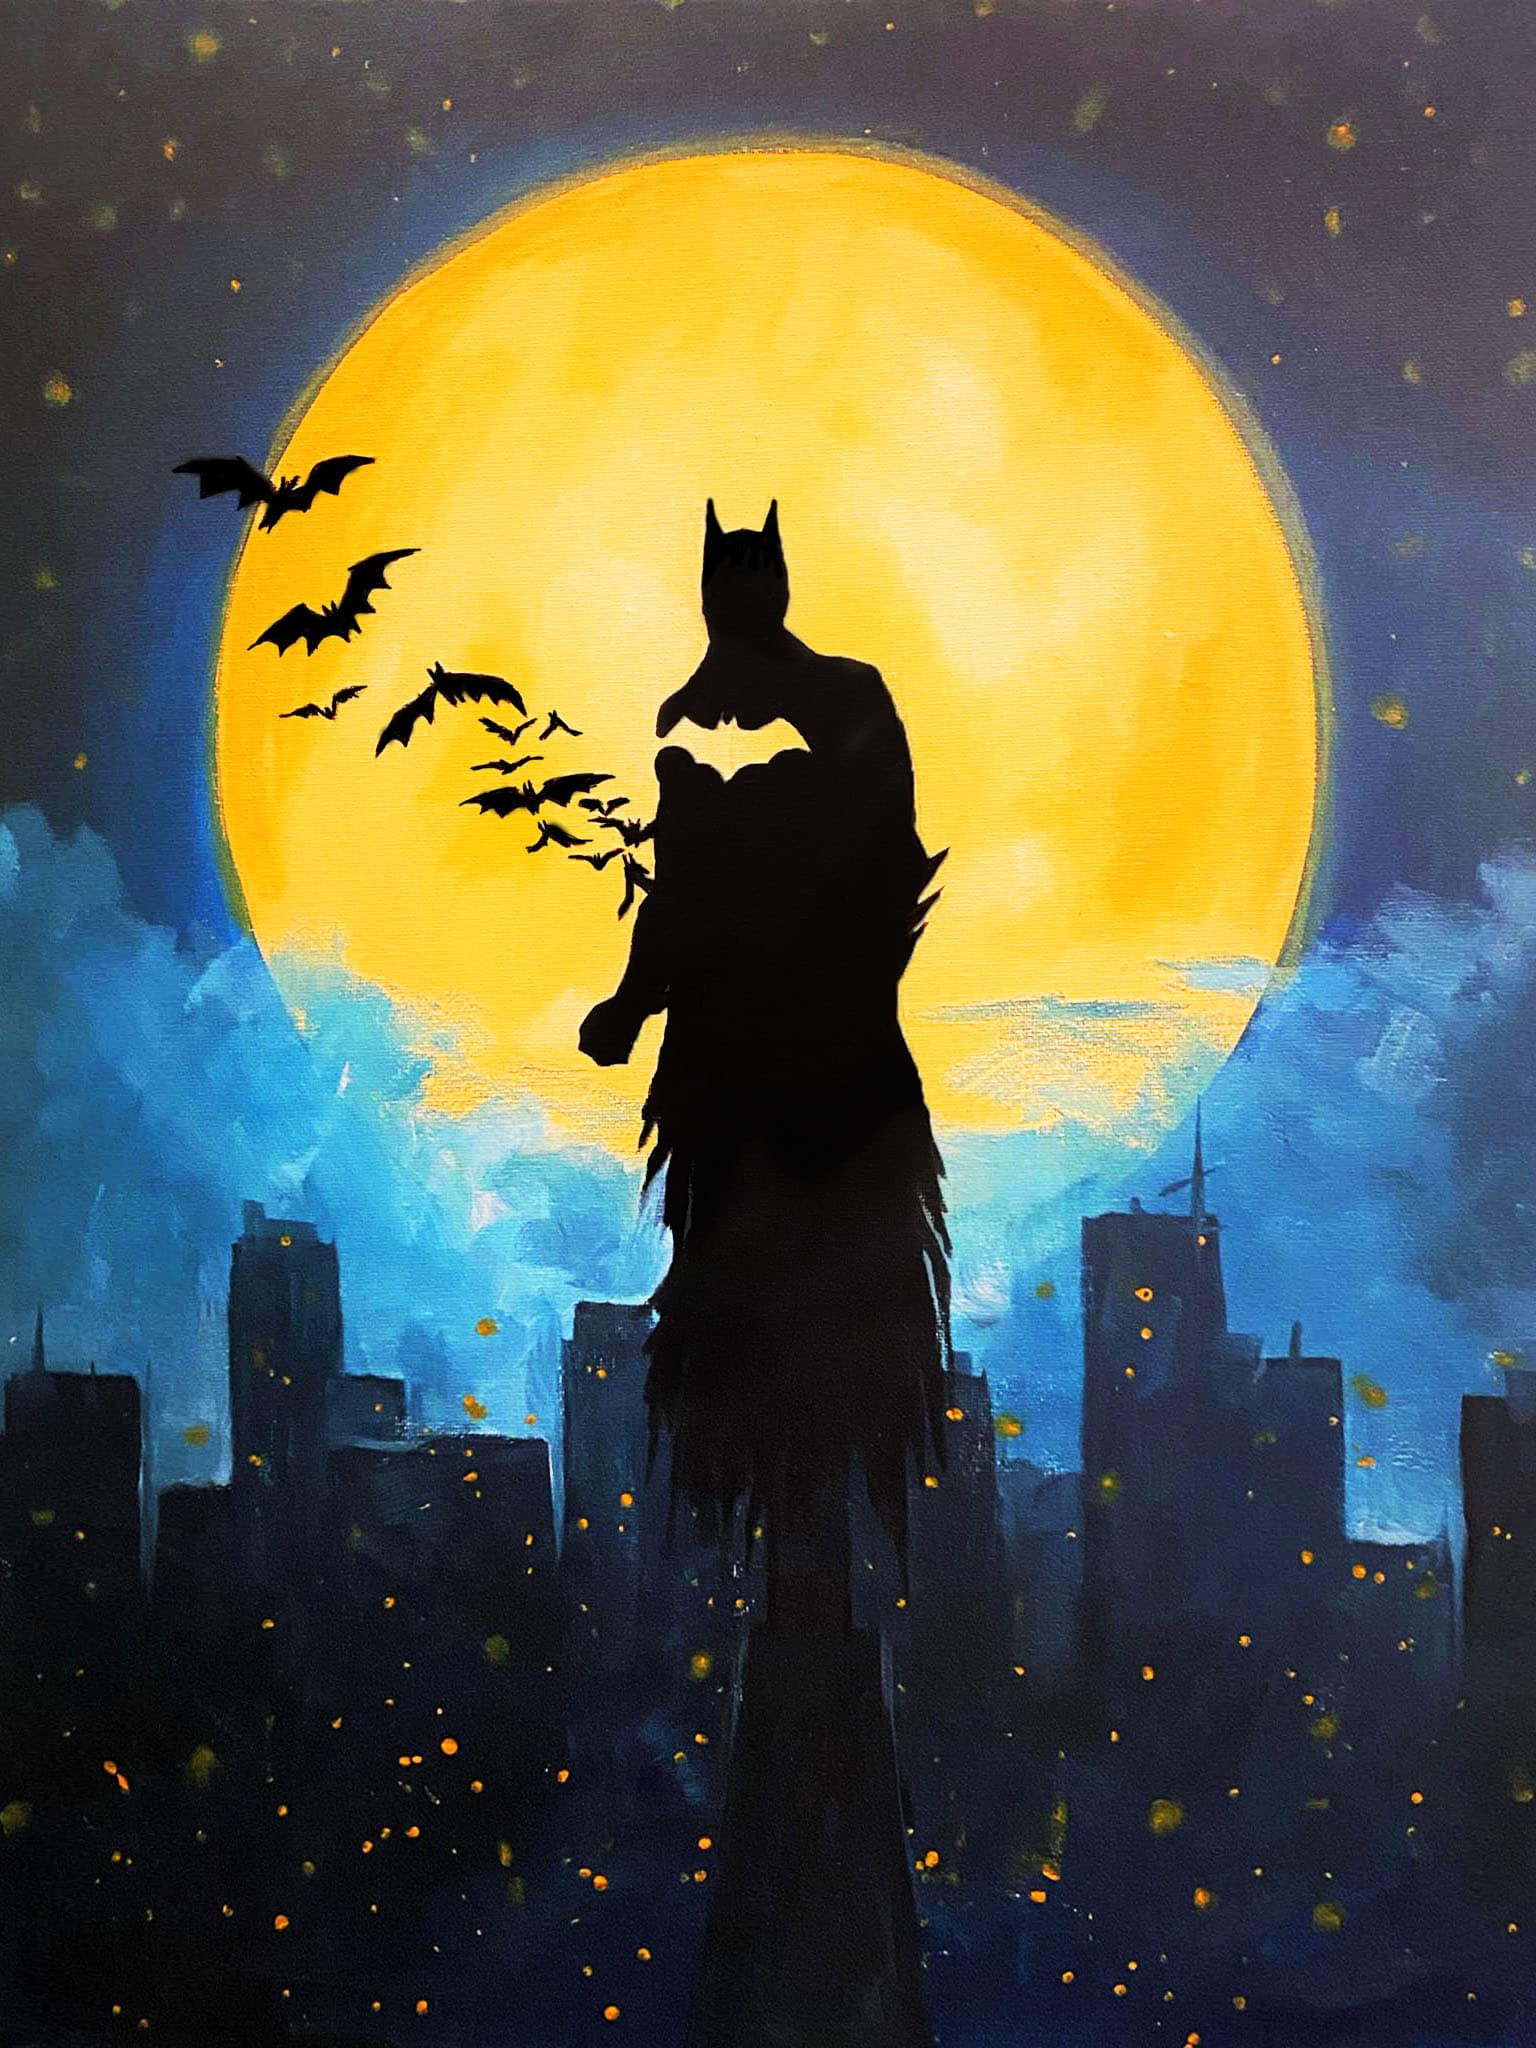 The Batman Dark Knight Art at Home Kit and Class